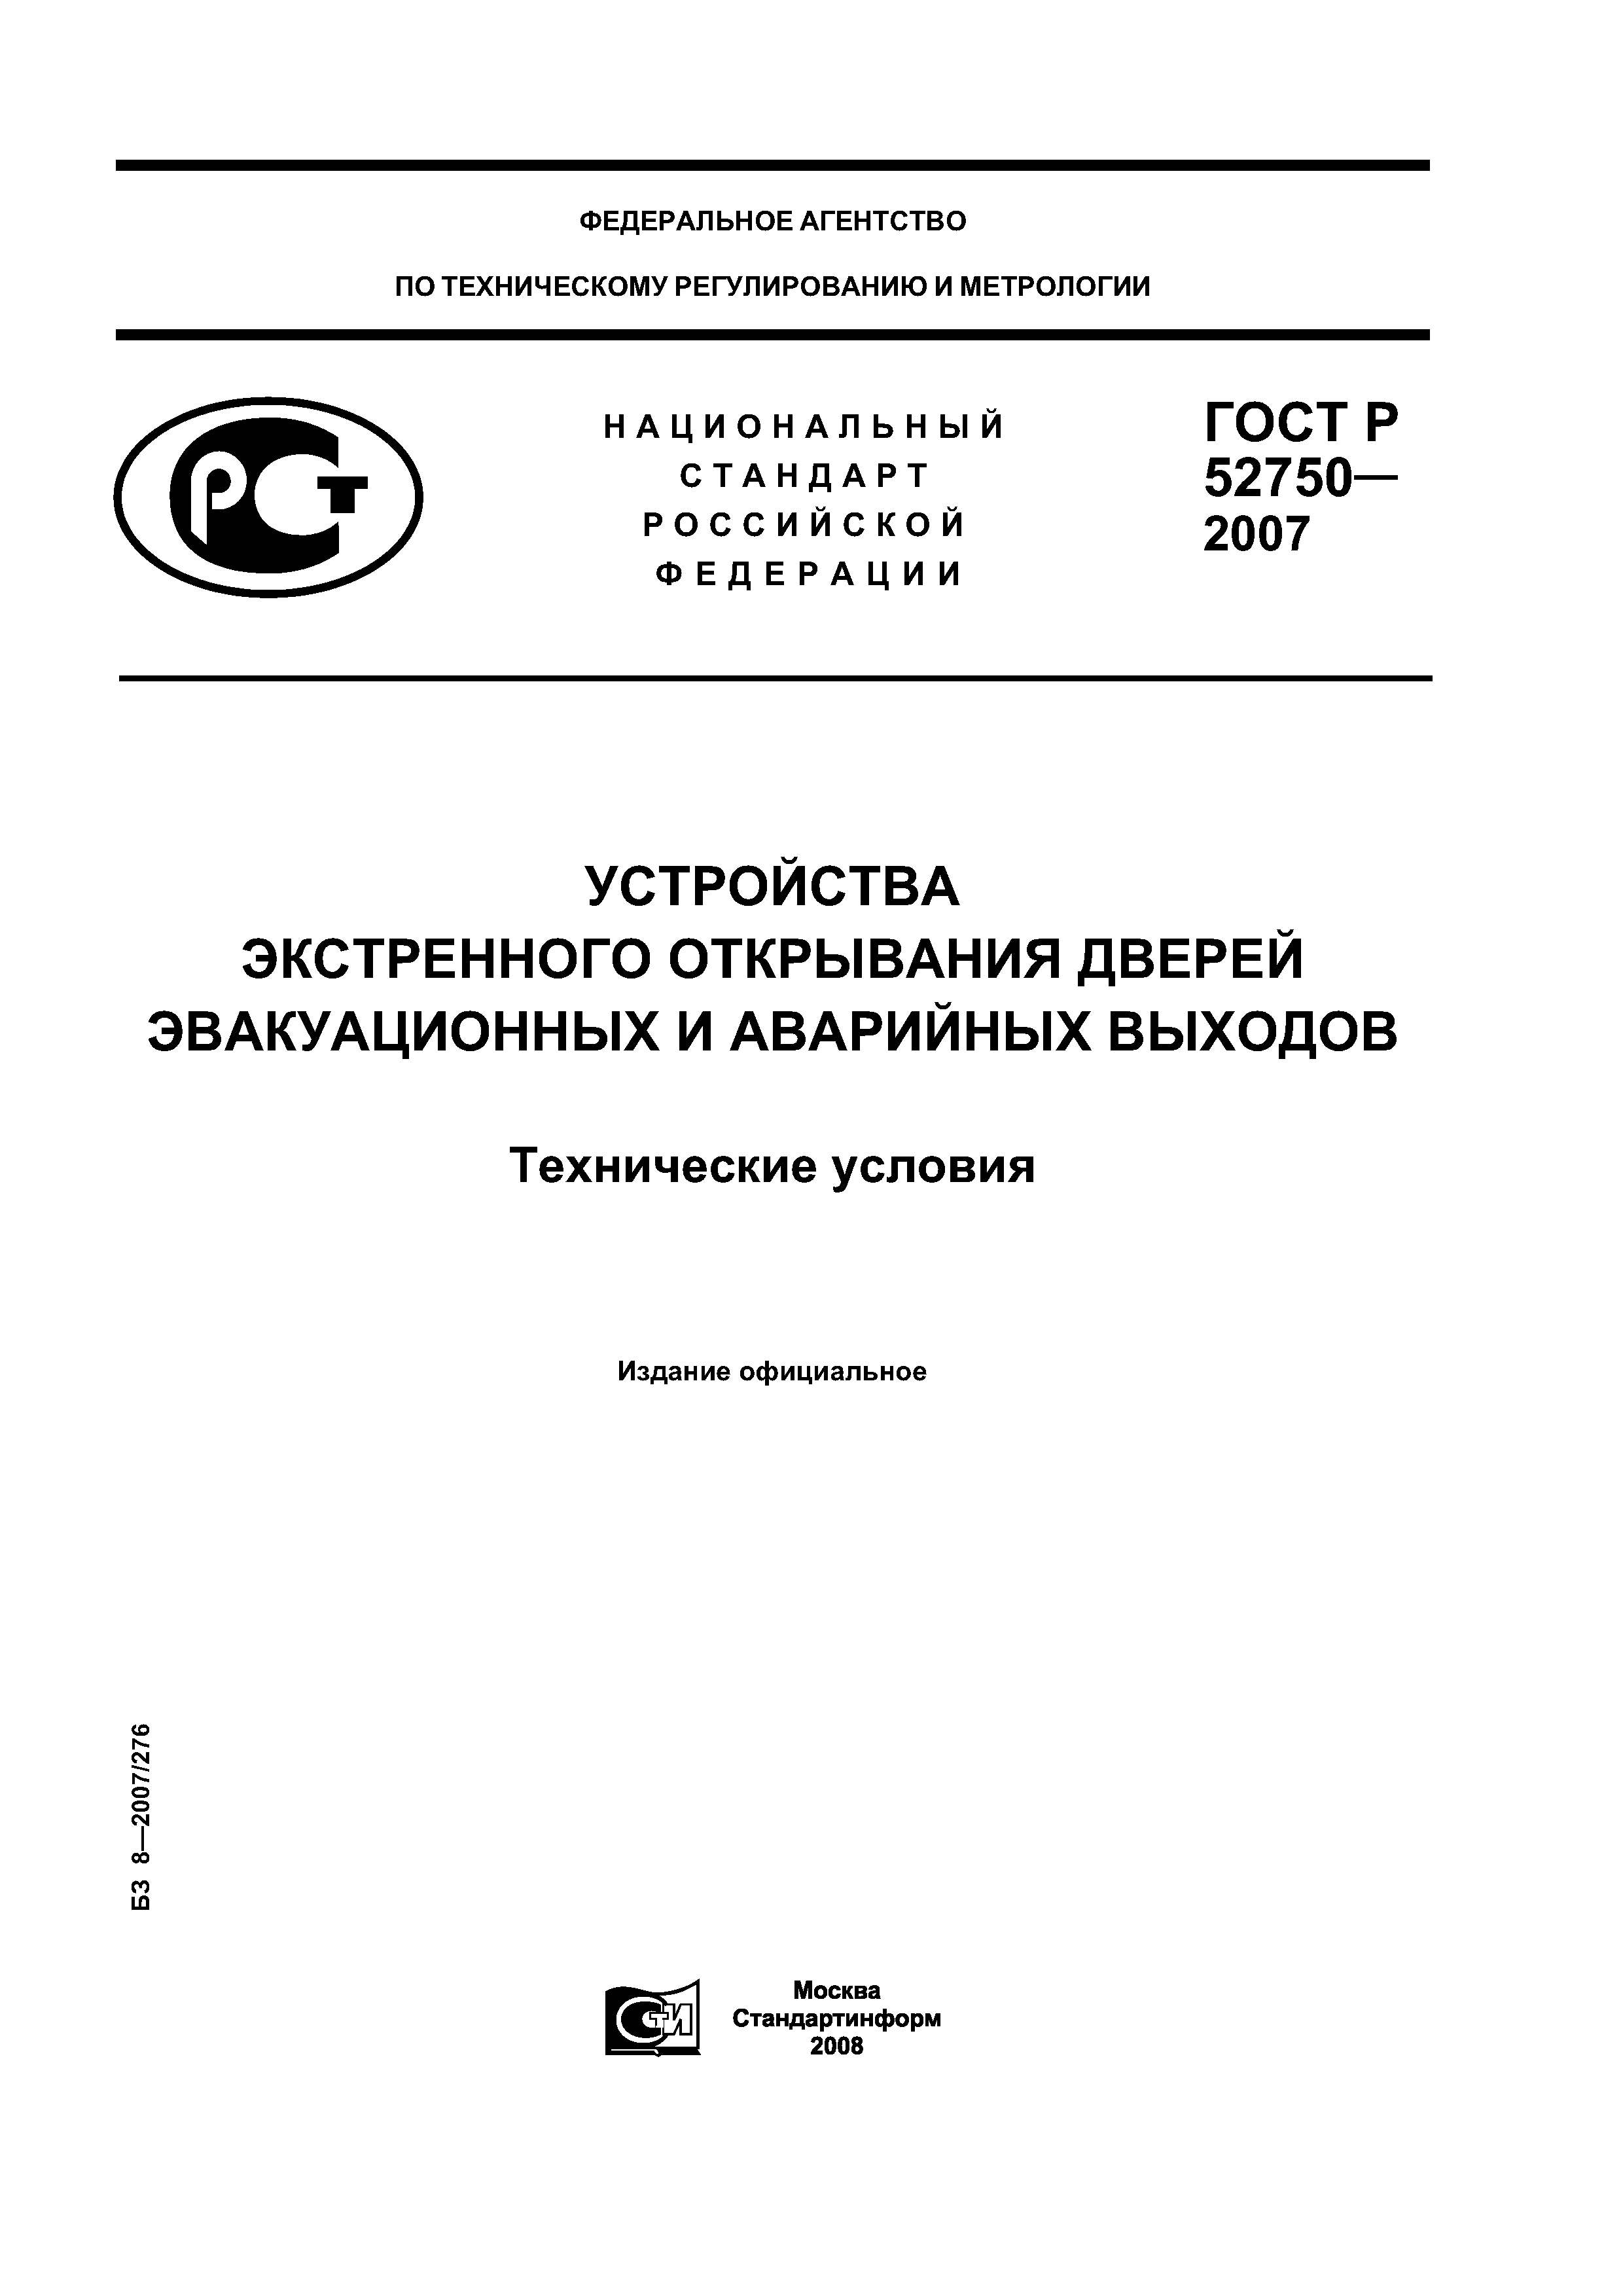 ГОСТ Р 52750-2007